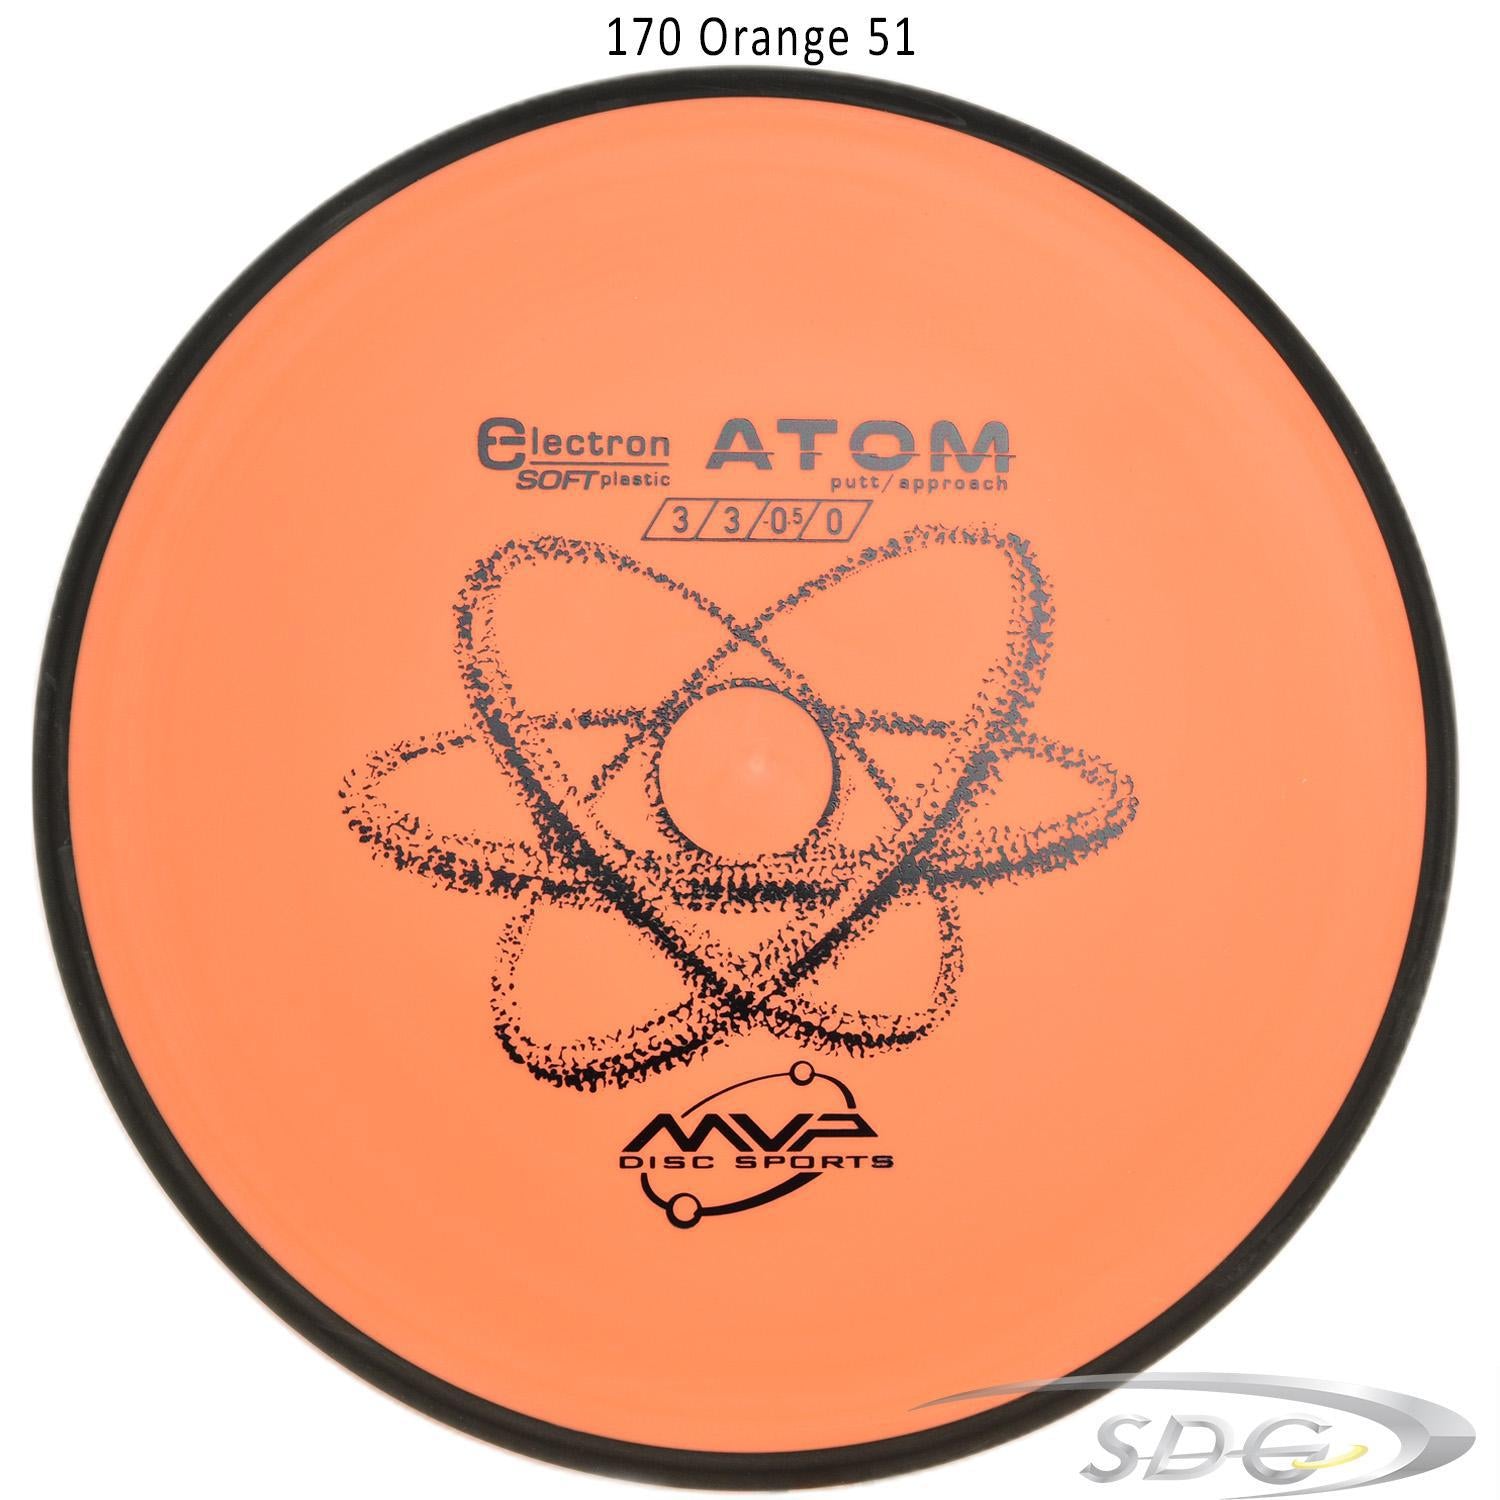 mvp-electron-atom-soft-disc-golf-putt-approach 170 Orange 51 